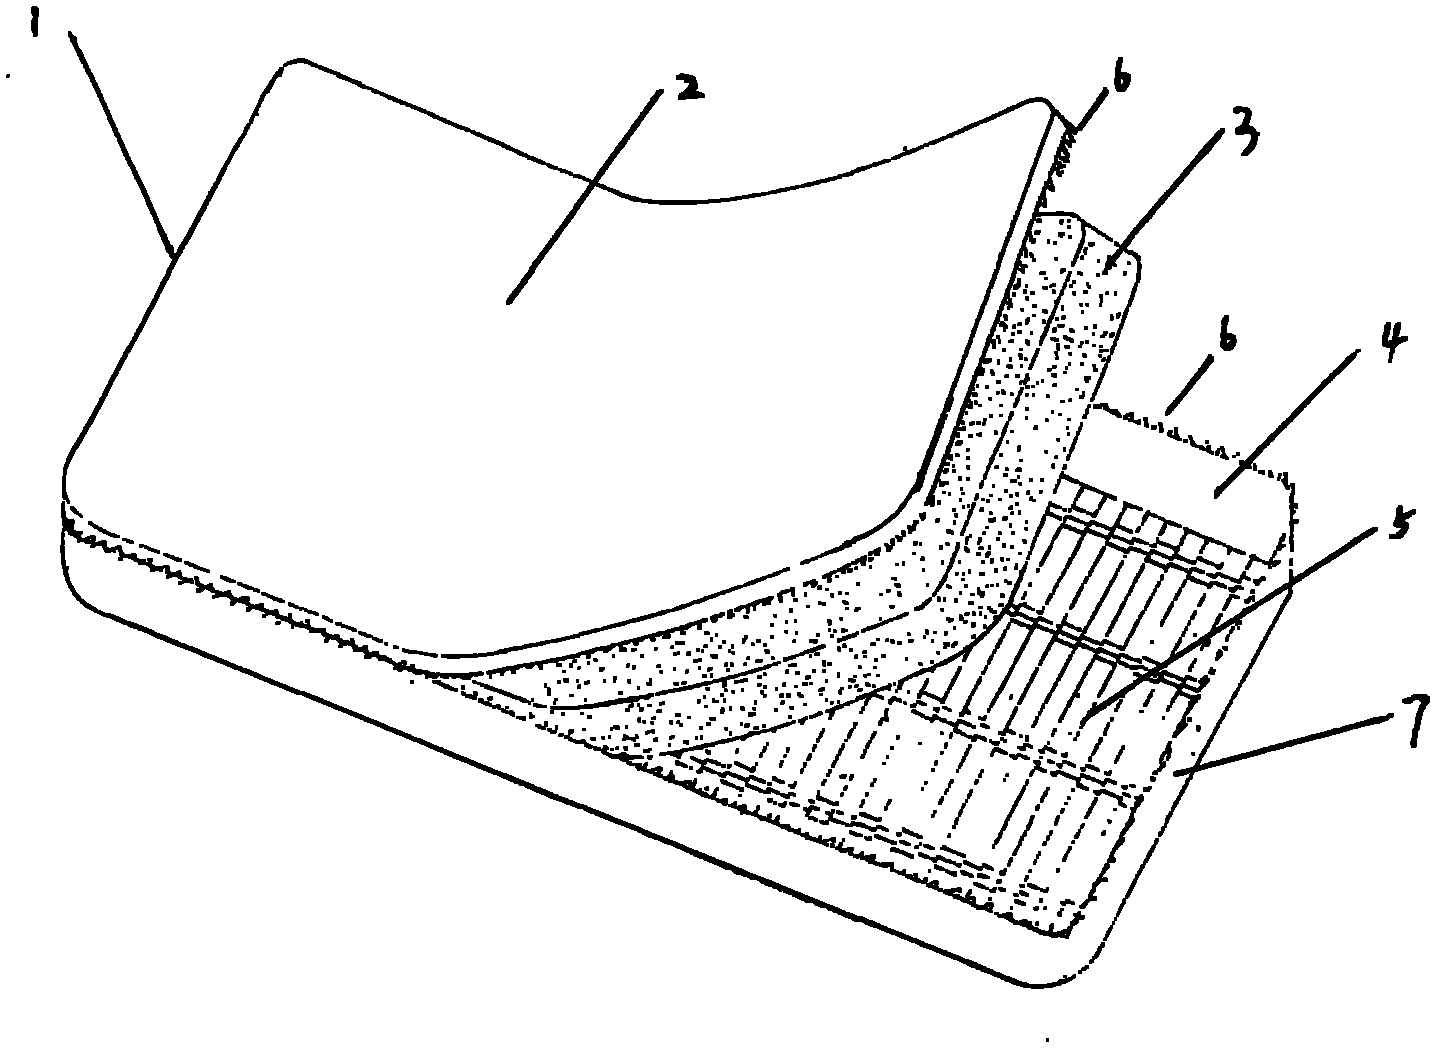 Folding and ventilation mattress